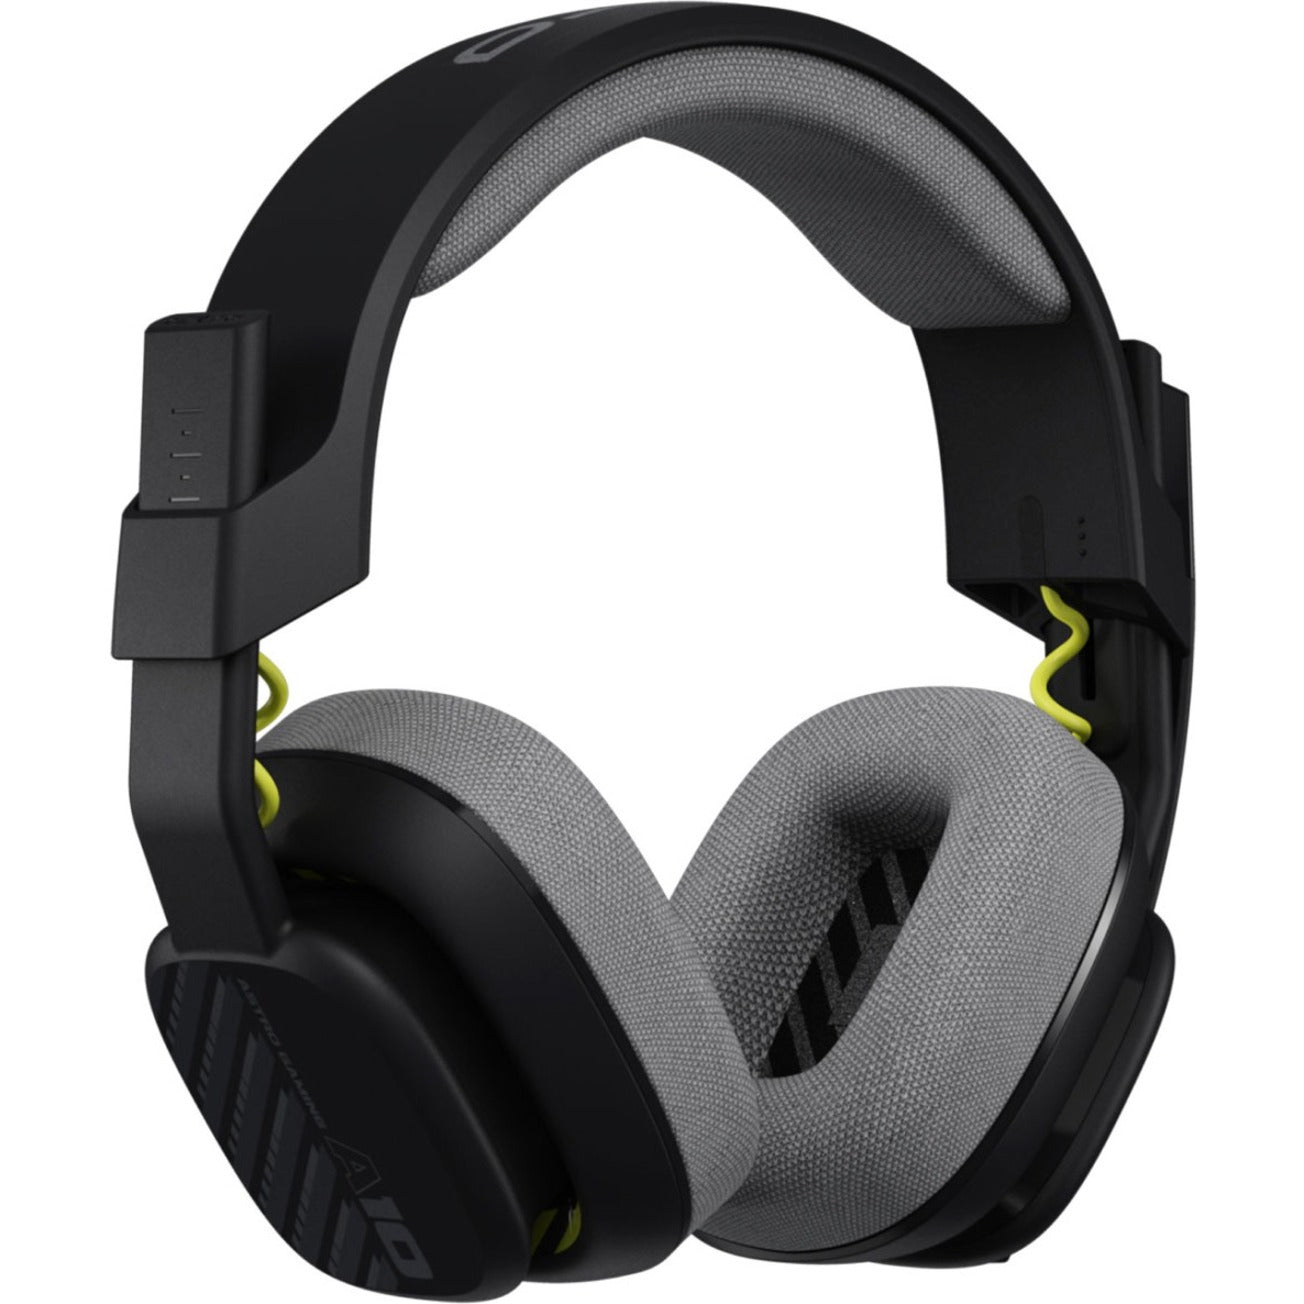 Astro 939-002045 A10 头戴式耳机 Xbox - 黑色，轻巧，翻转静音，耐用 品牌名称：Astro 品牌名称翻译：天文